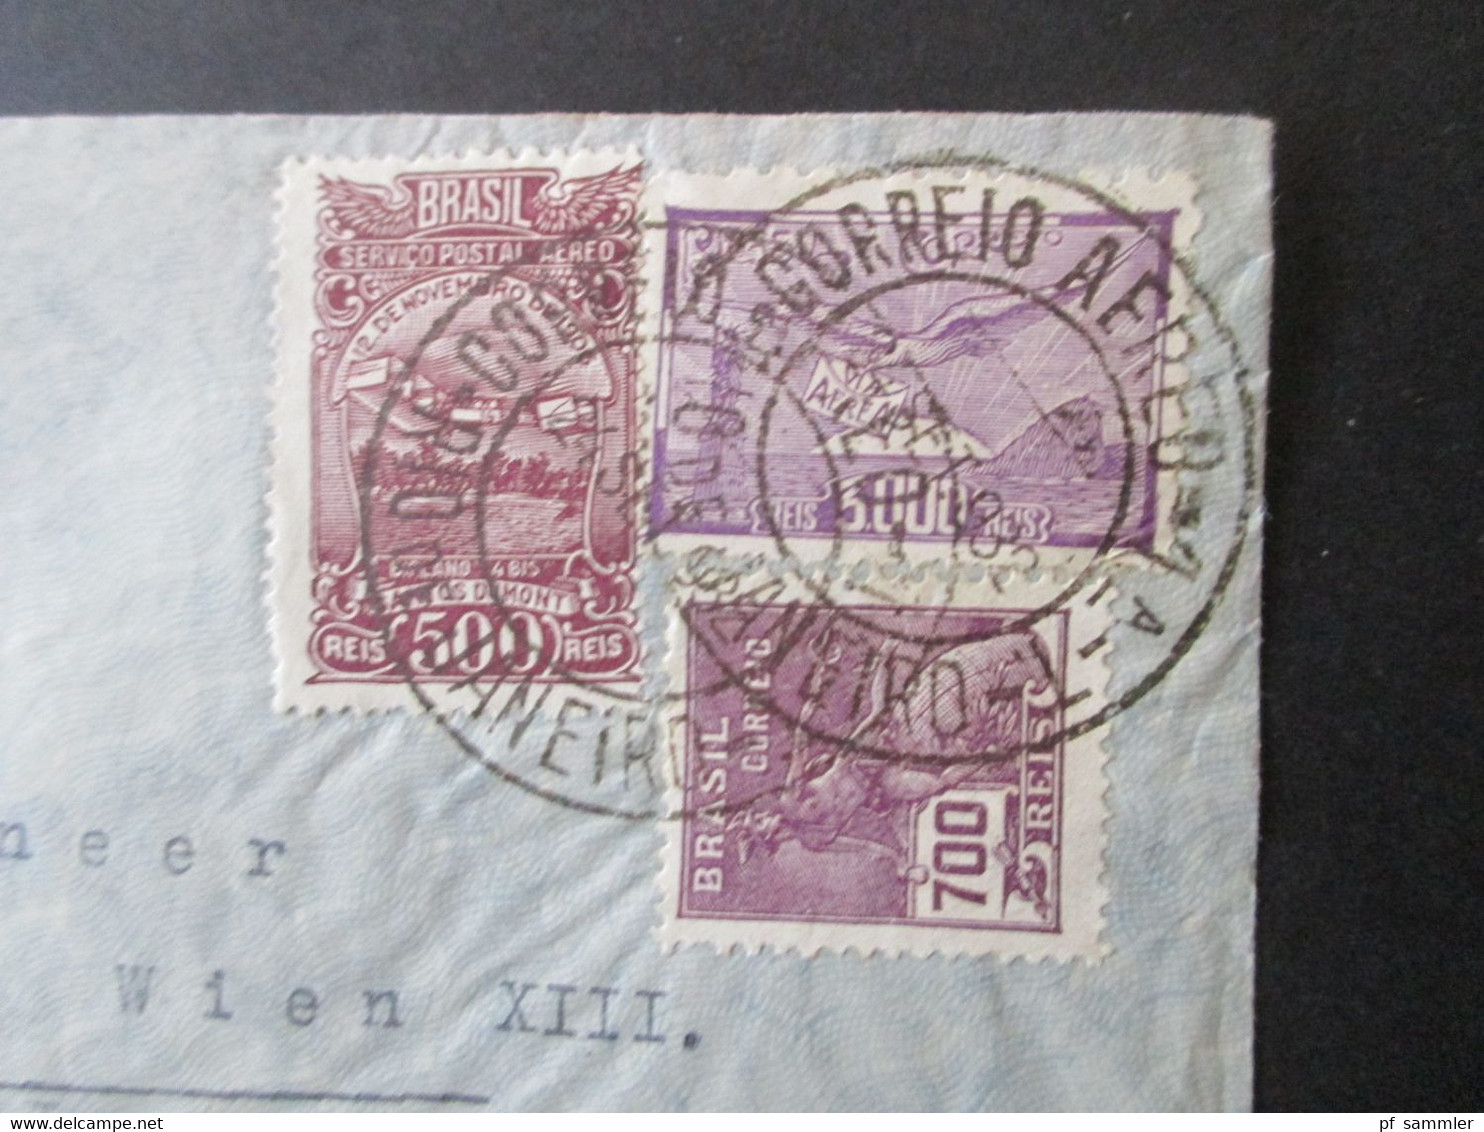 Brasilien 1932 Luftpostbeleg Violetter Stempel Via Aeropostale Mit Flugpostmarke Nr. 337 Nach Wien Gesendet - Briefe U. Dokumente